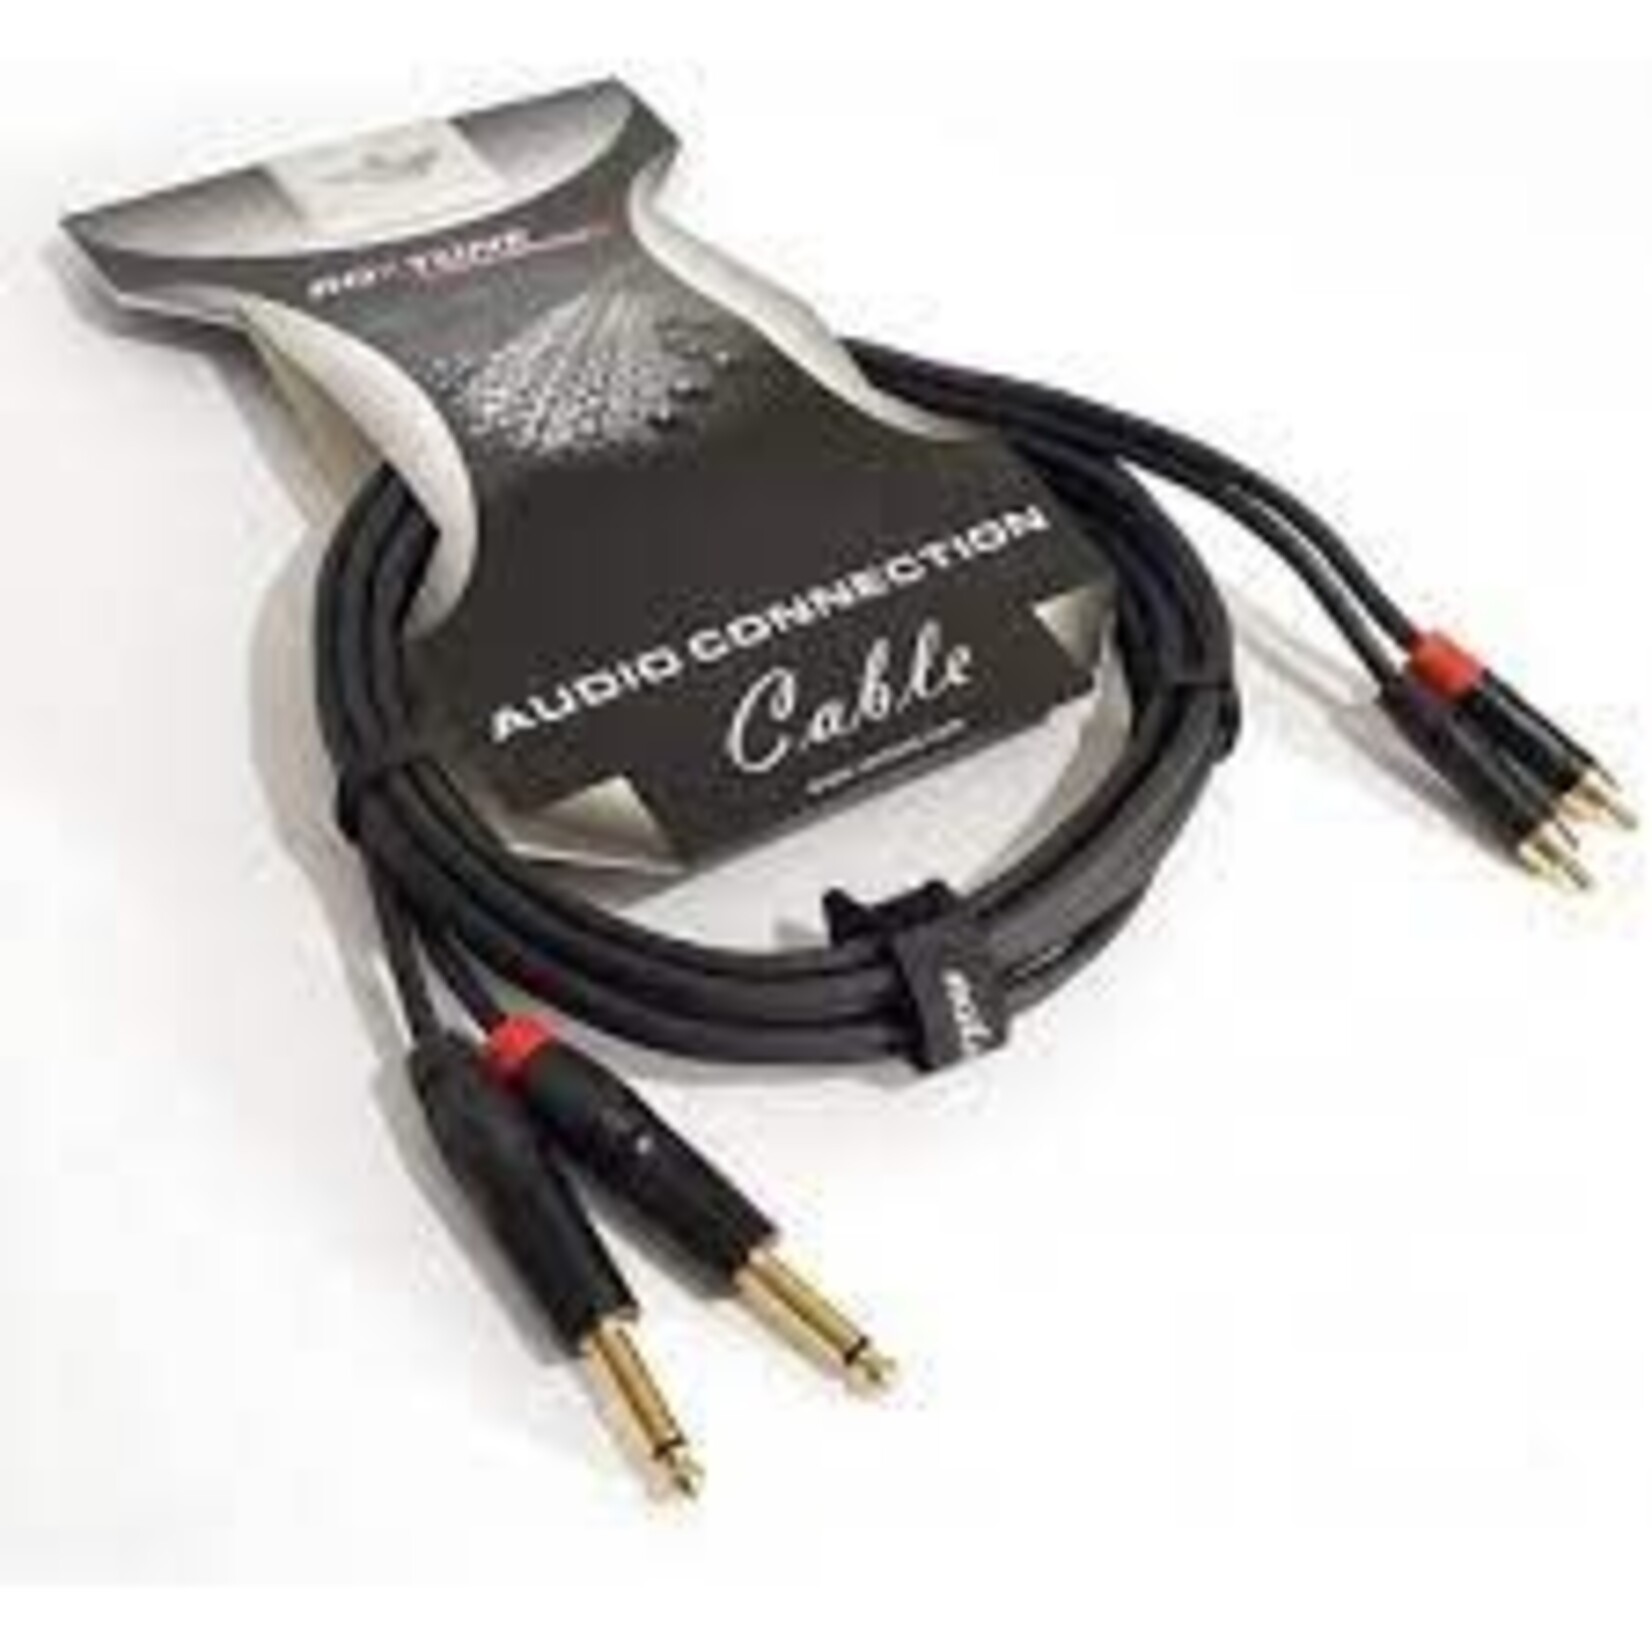 Roxtone Roxtone GPTC200L3 G-Series Dual RCA Male to Dual 1/4 Mono Male Cable 3M